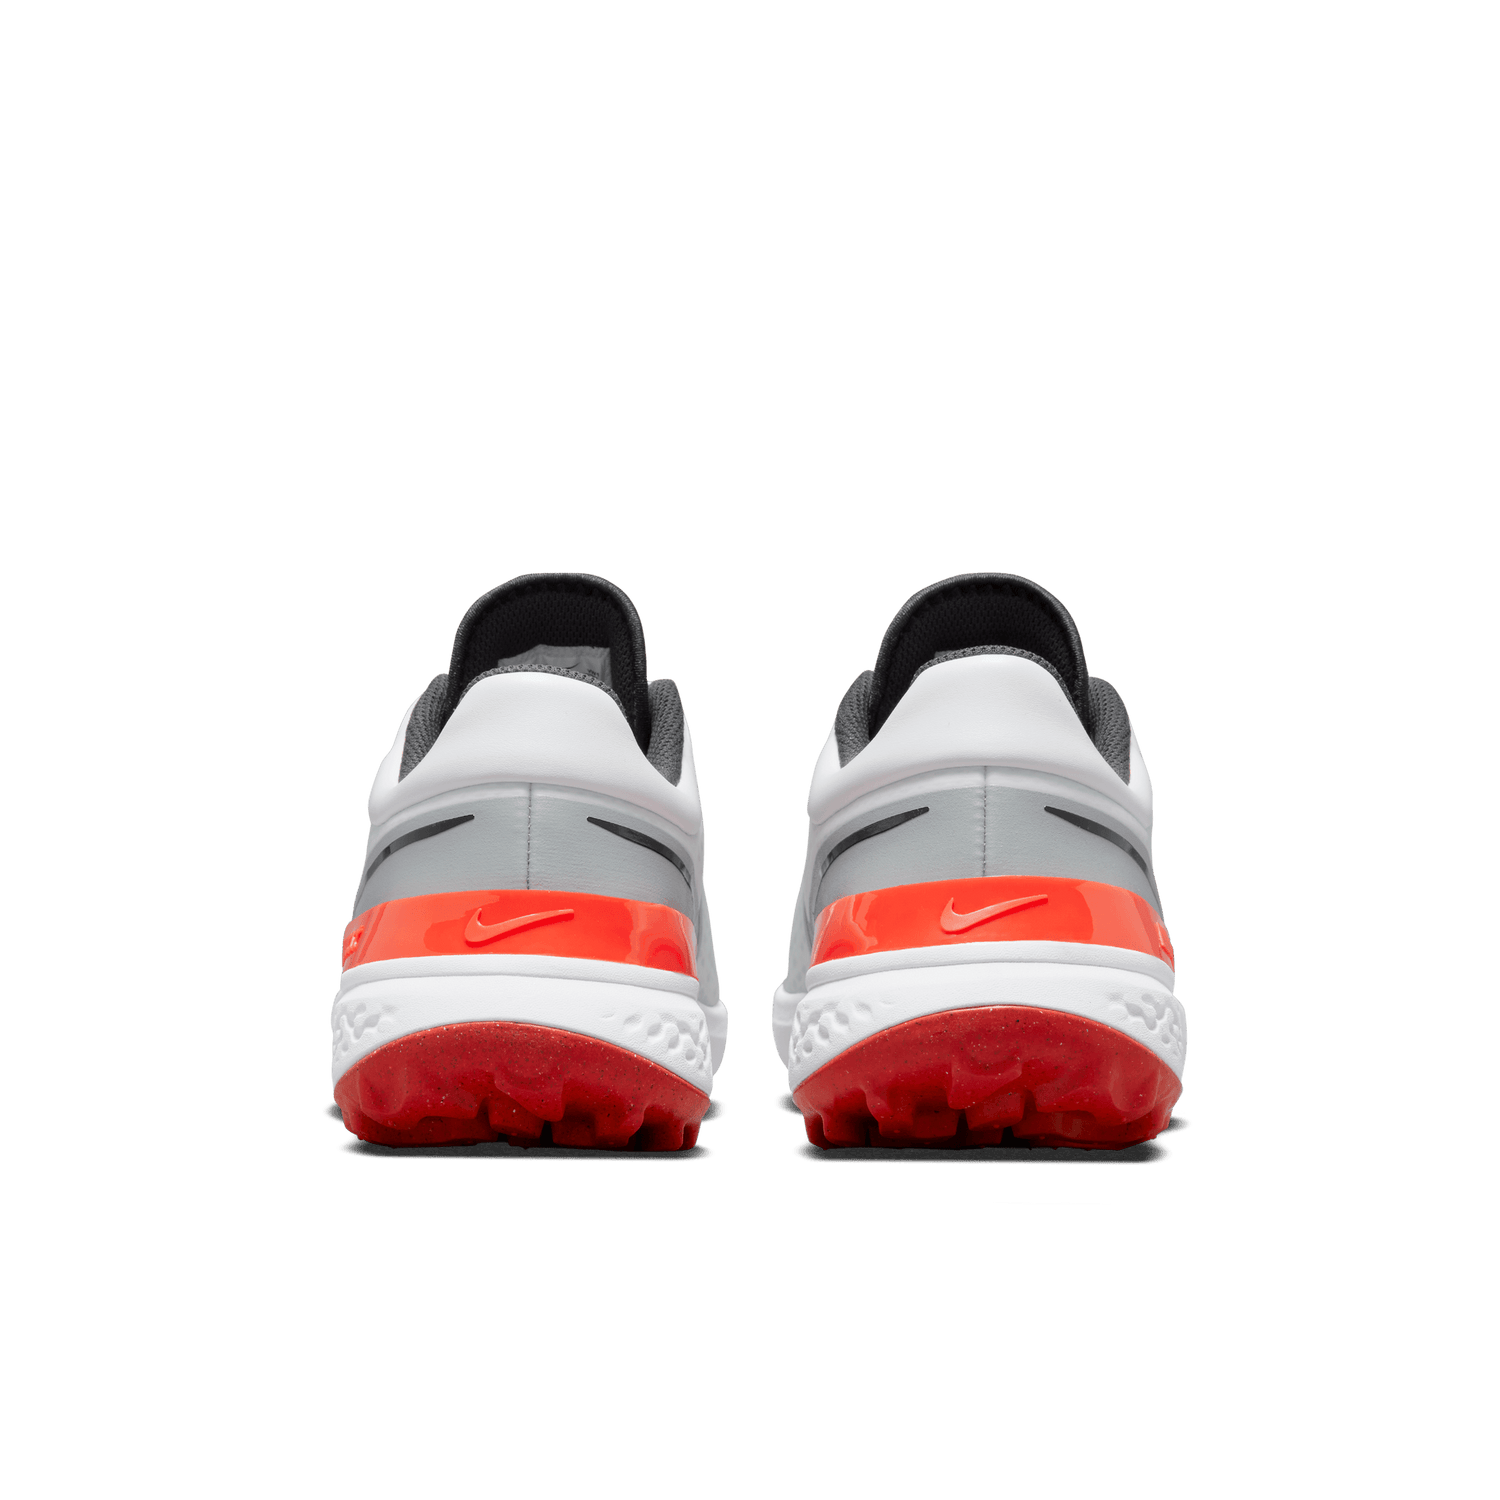 Nike Golf Infinity Pro 2 Spikeless Golf Shoes DJ5593   